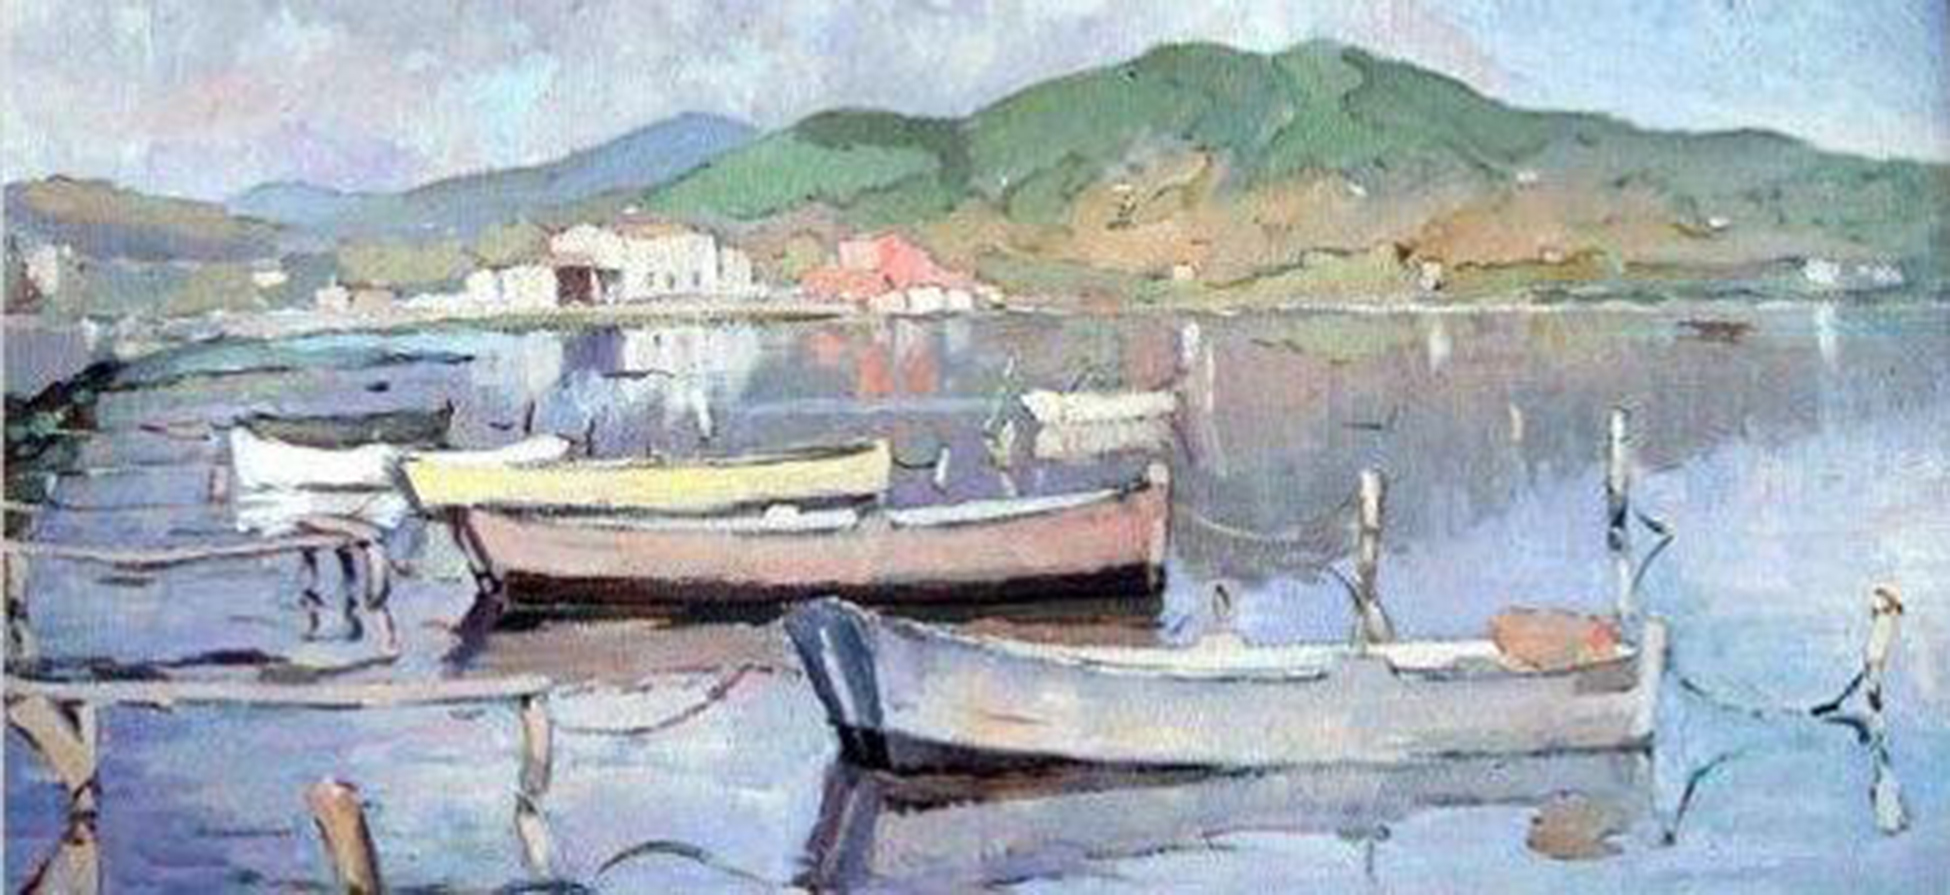 Barques (detall). Antoni Pomar. Eivissa, 1953. Oli sobre tela. Col·lecció Ramon Medina